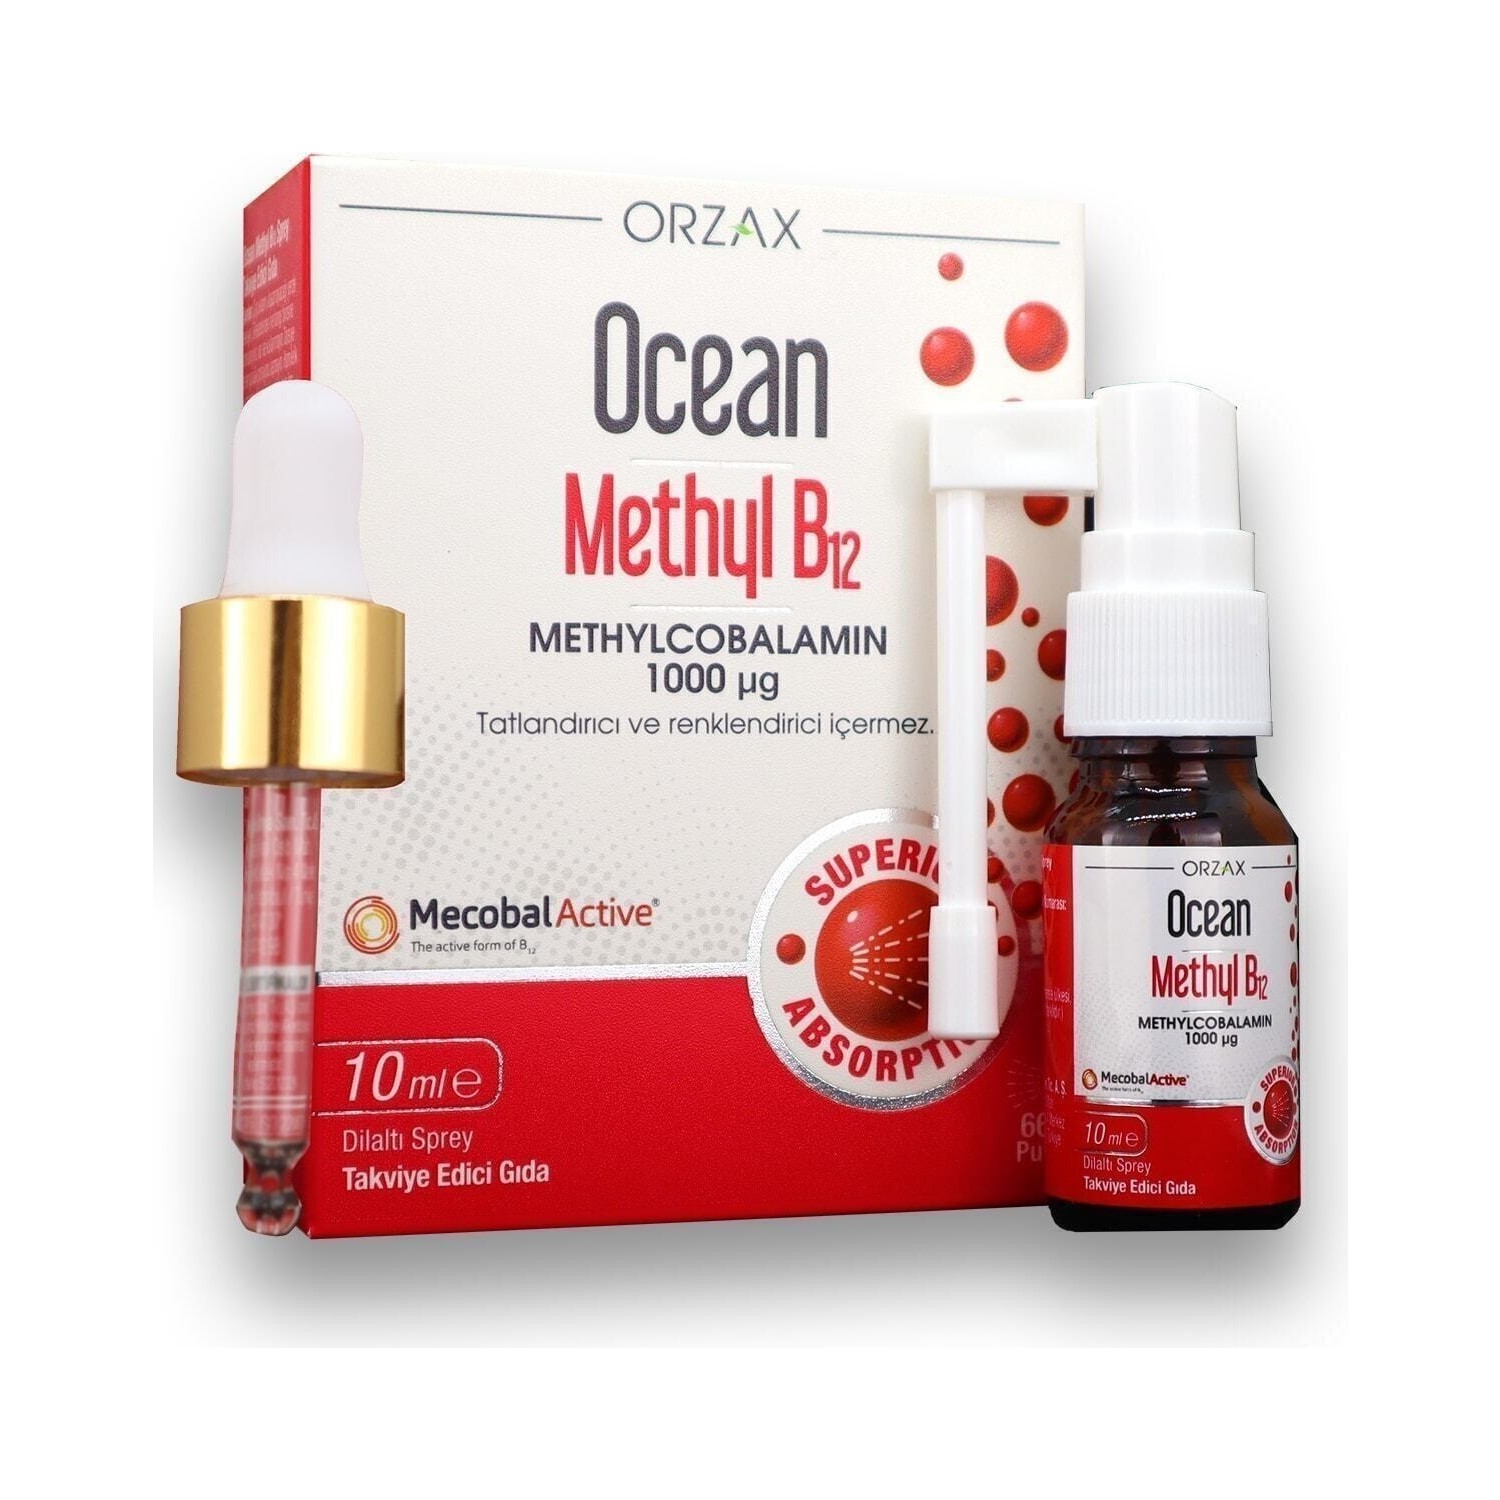 спрей orzax ocean methyl b12 1000 мкг 5 упаковок по 10 мл Пищевая добавка Orzax Ocean Methyl B12, 10 мл